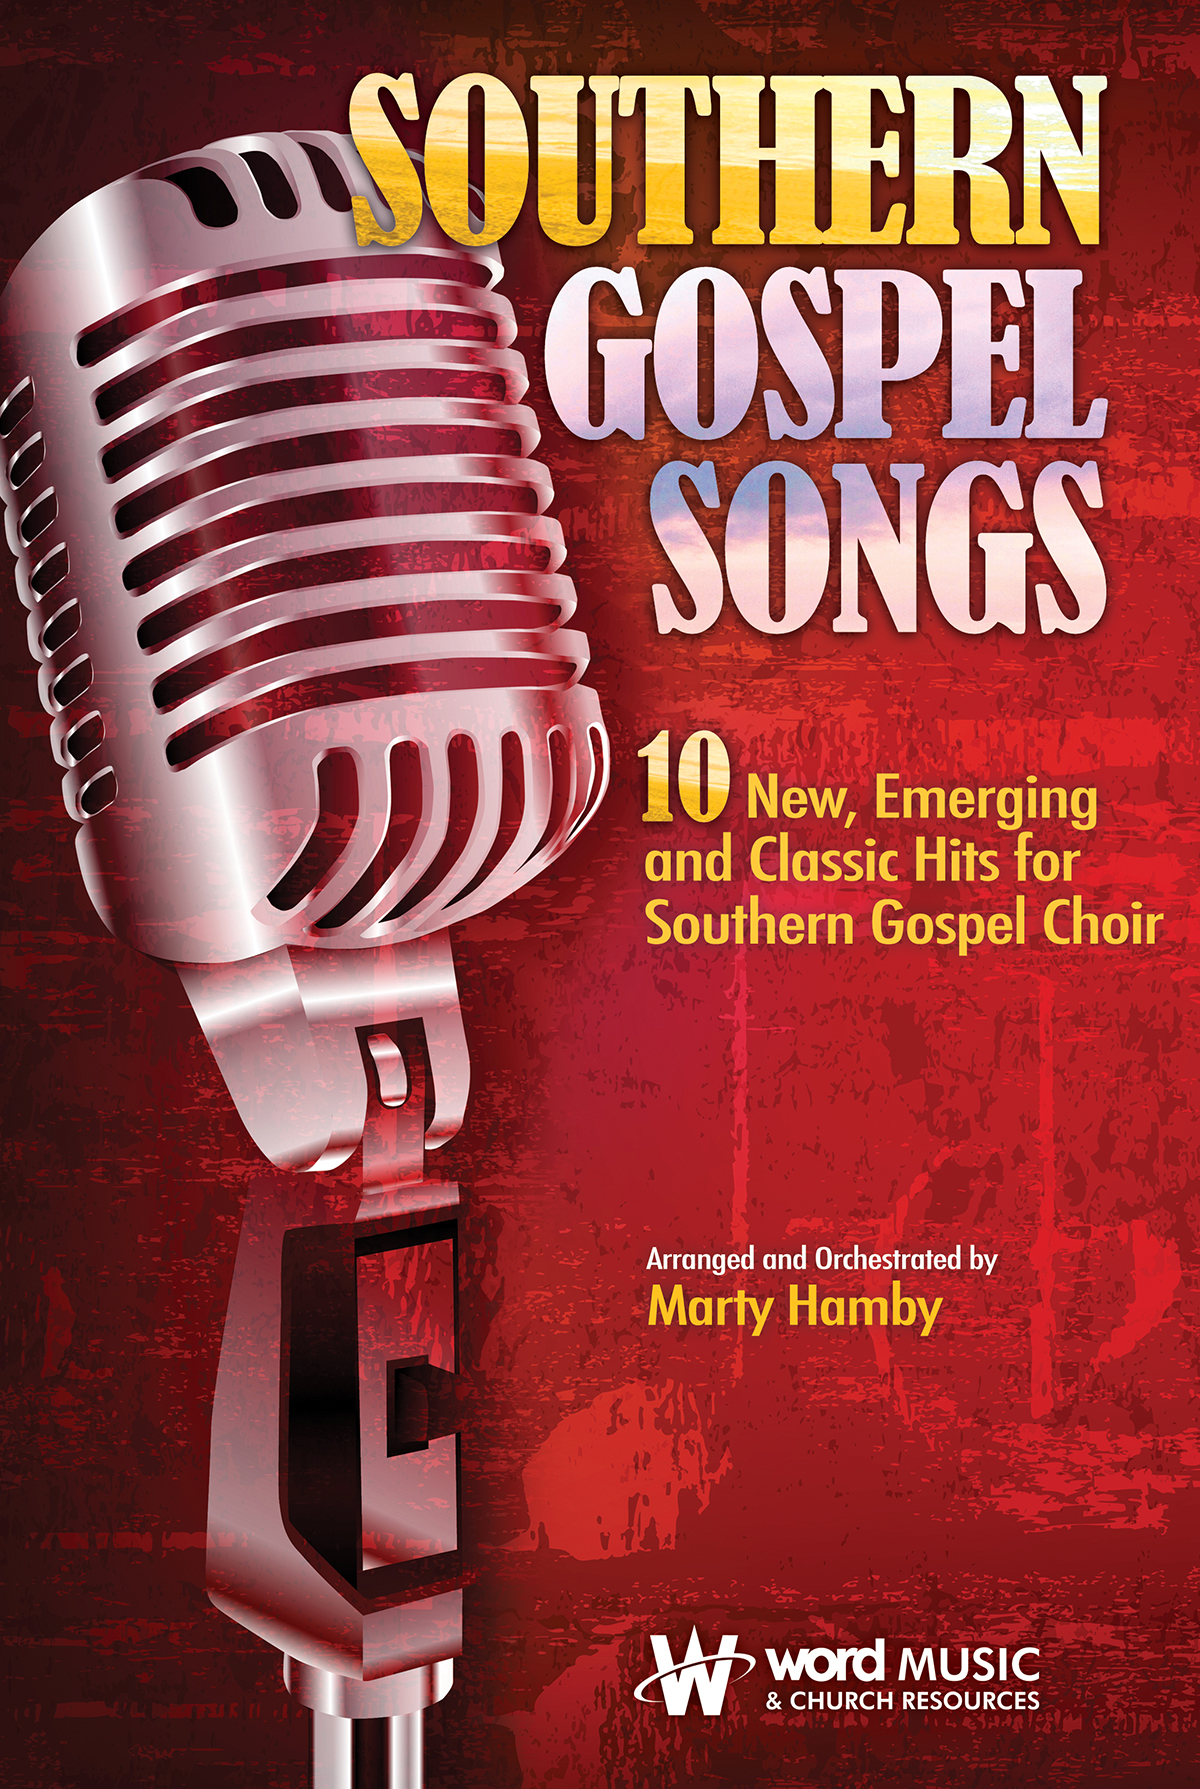 southern gospel soundtracks free download